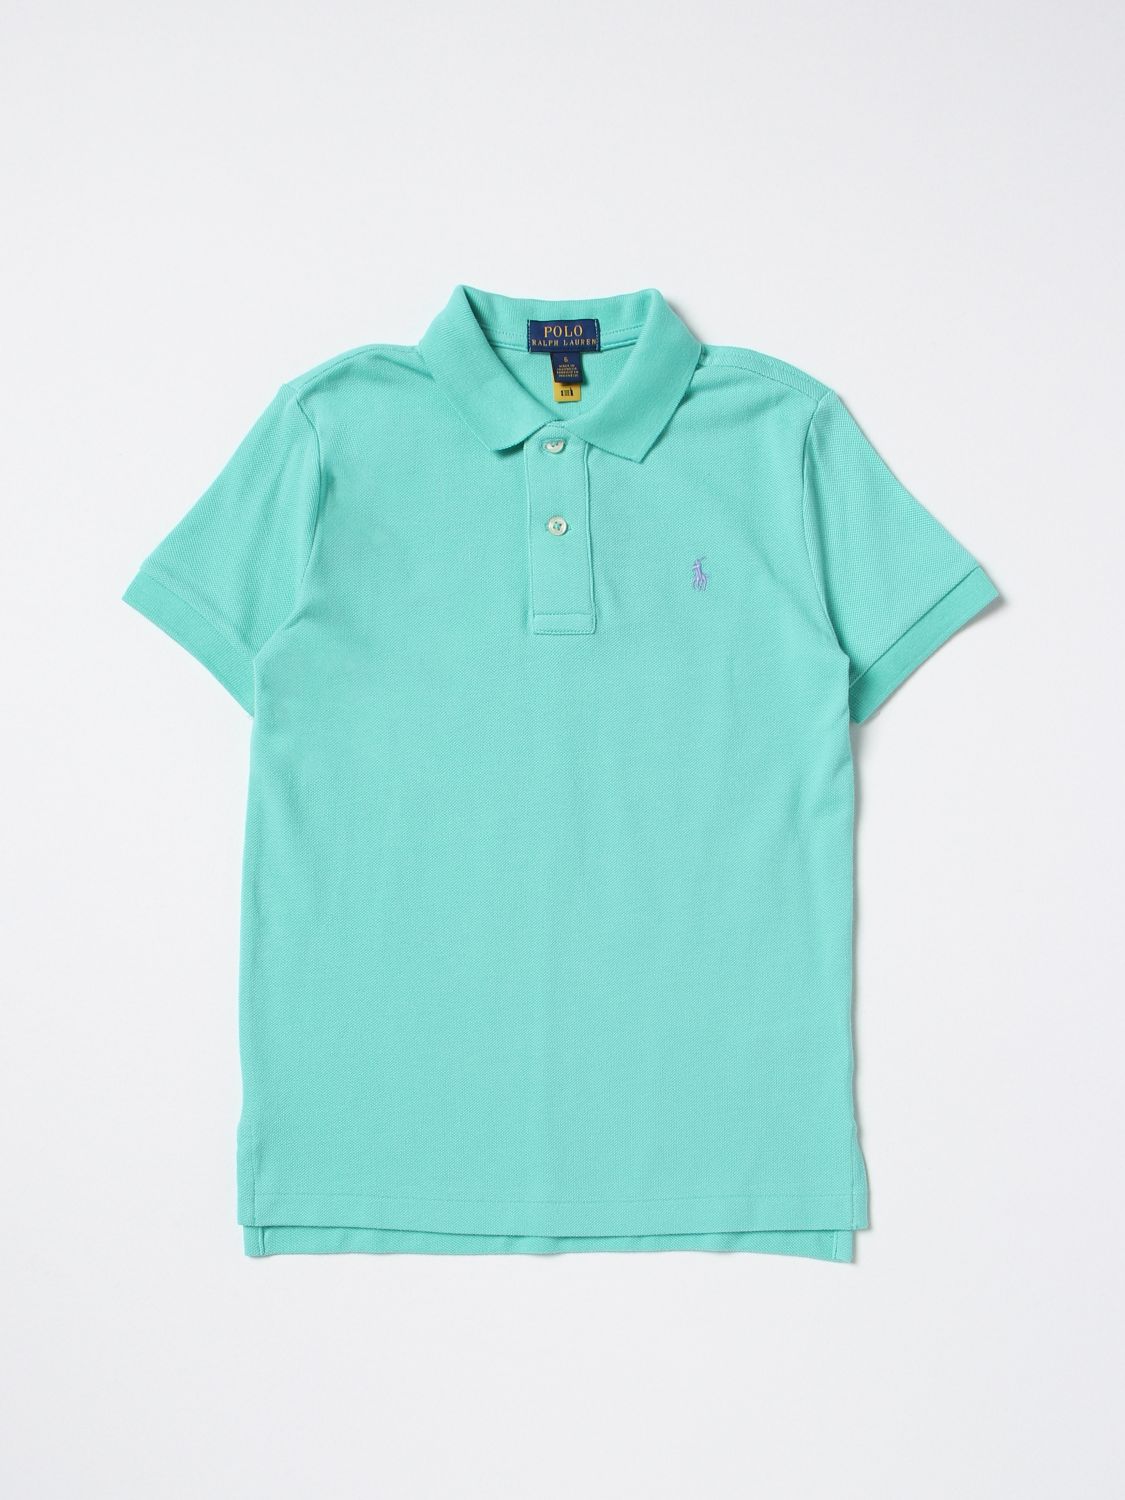 grond Verdampen dood POLO RALPH LAUREN: polo shirt for boys - Green | Polo Ralph Lauren polo  shirt 322703632 online on GIGLIO.COM